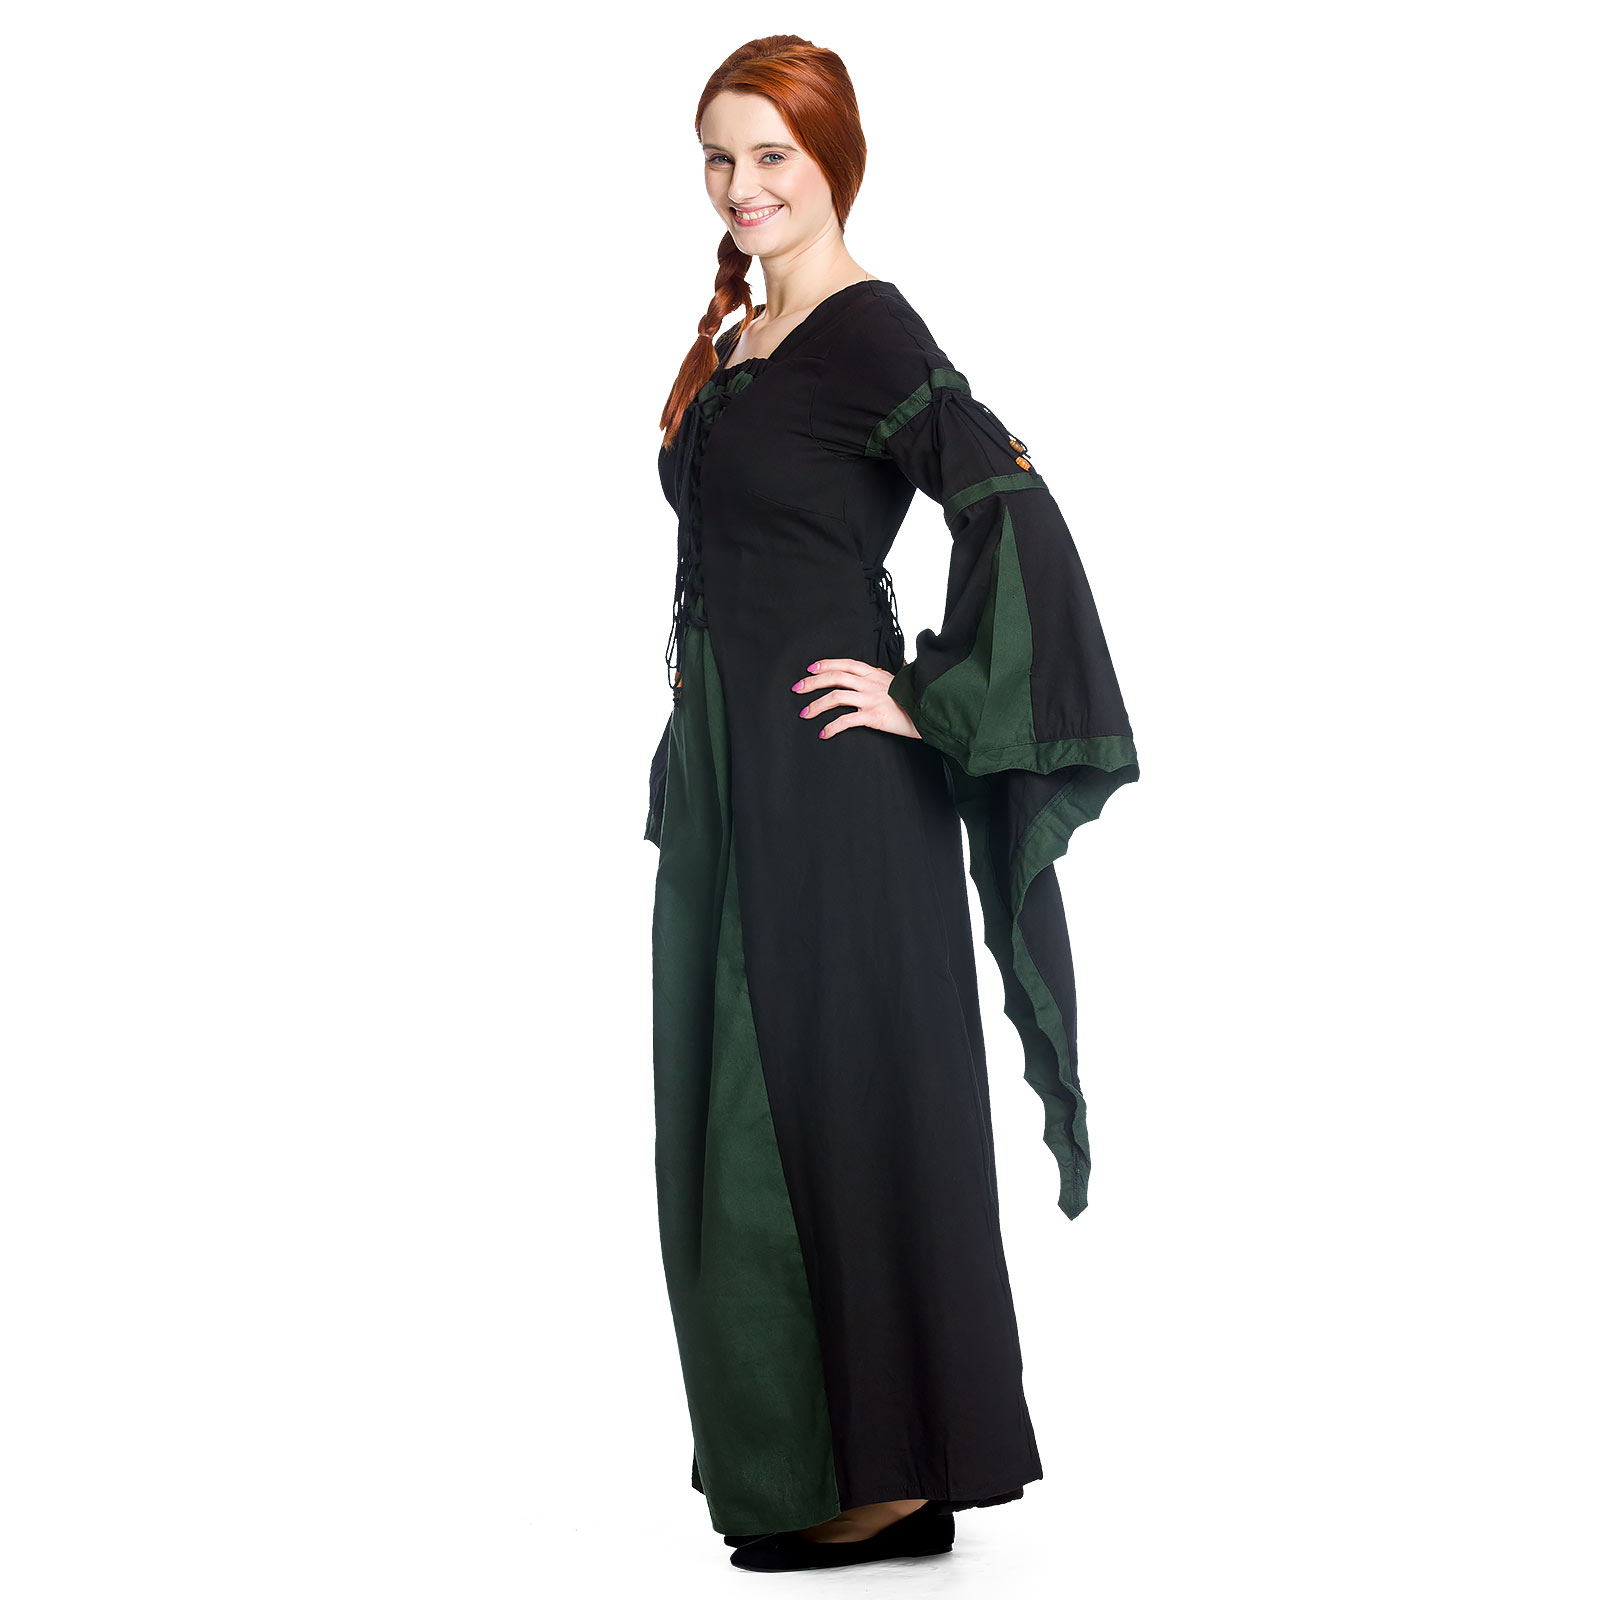 Leona - Middeleeuwse jurk zwart-groen